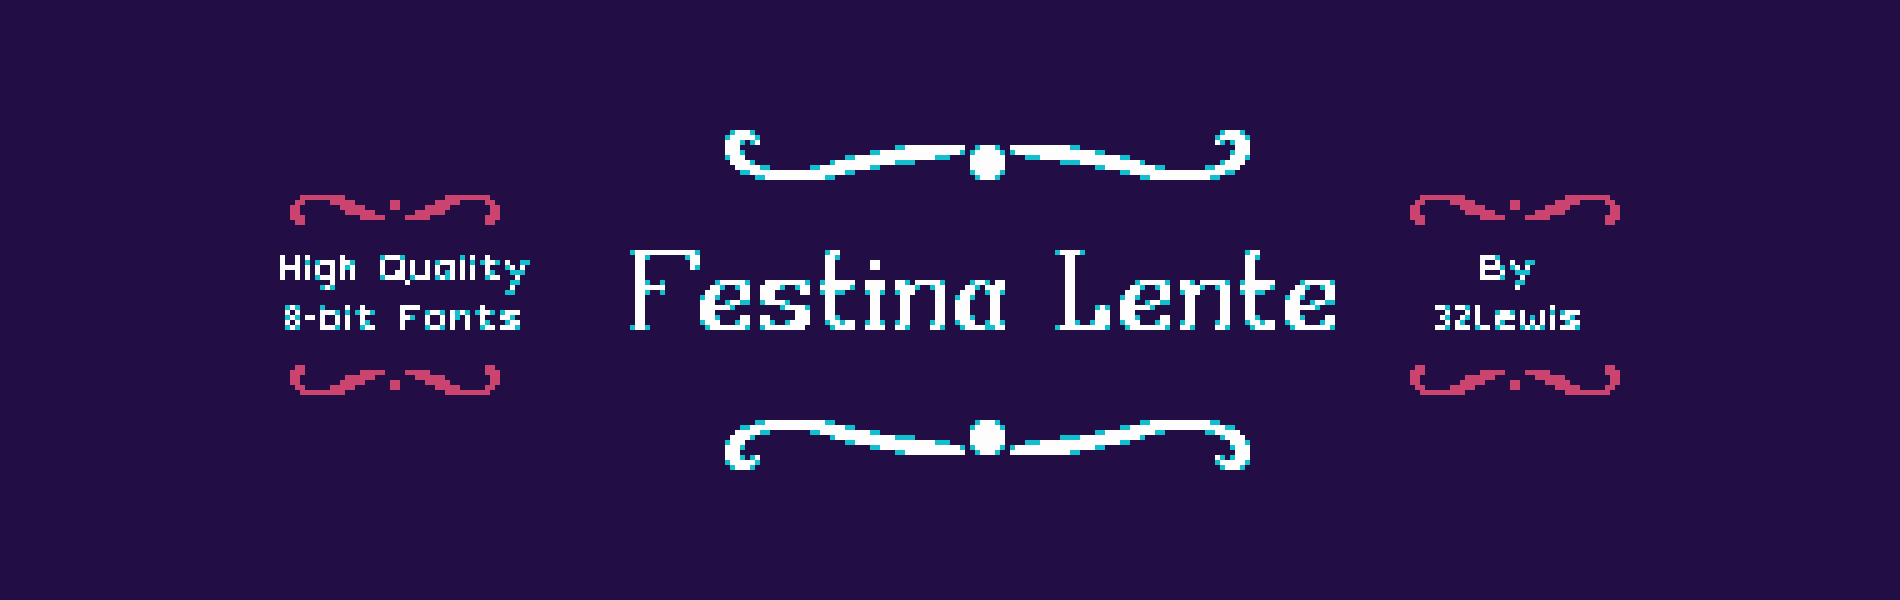 Festina Lente - High Quality Pixel Art Font